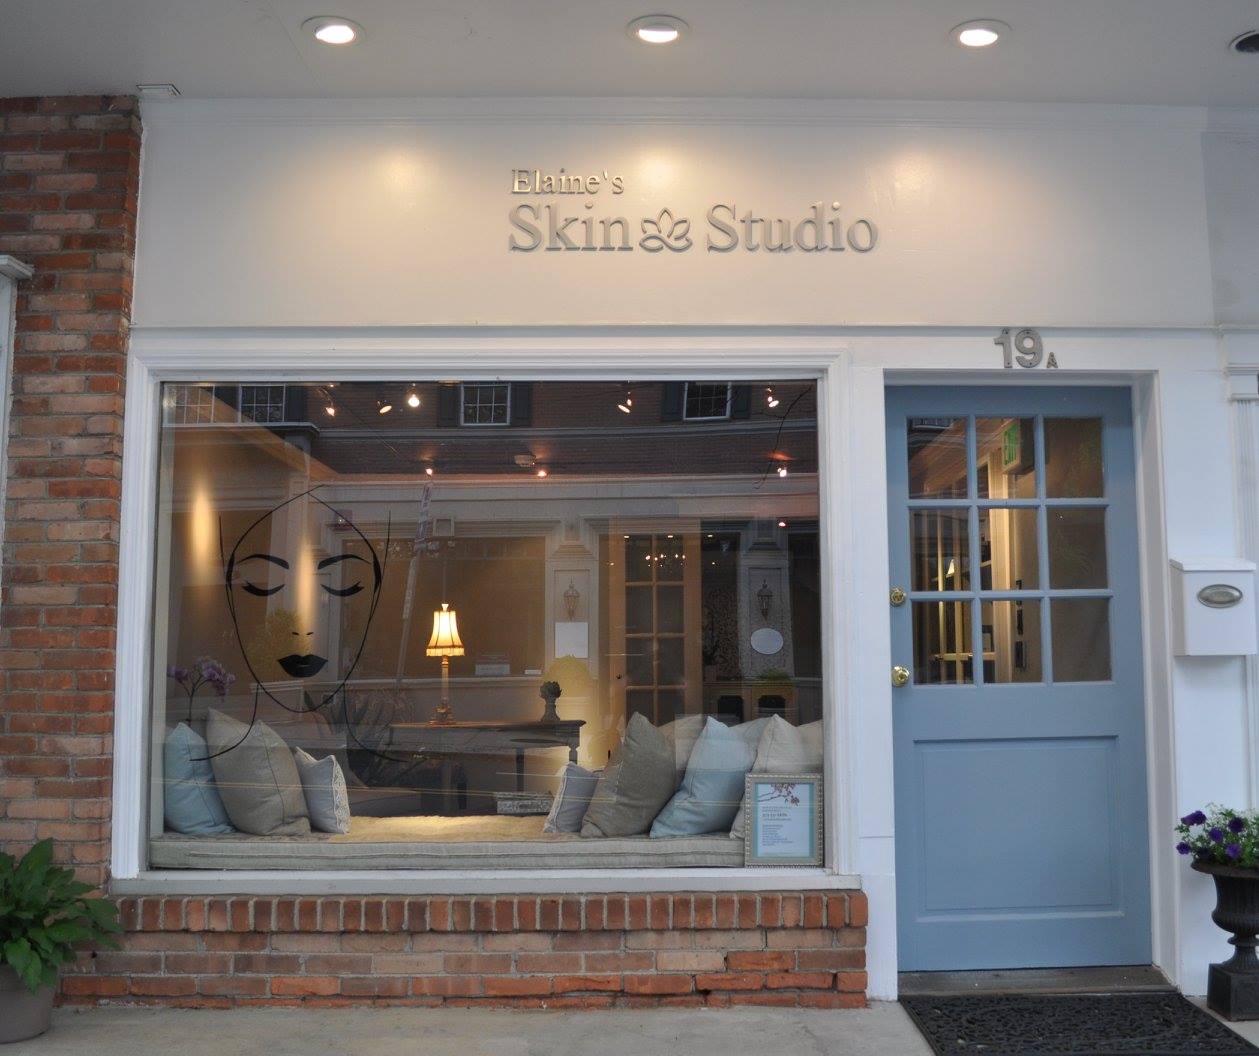 Elaine's Skin Studio 19a Claremont Rd, Bernardsville New Jersey 07924